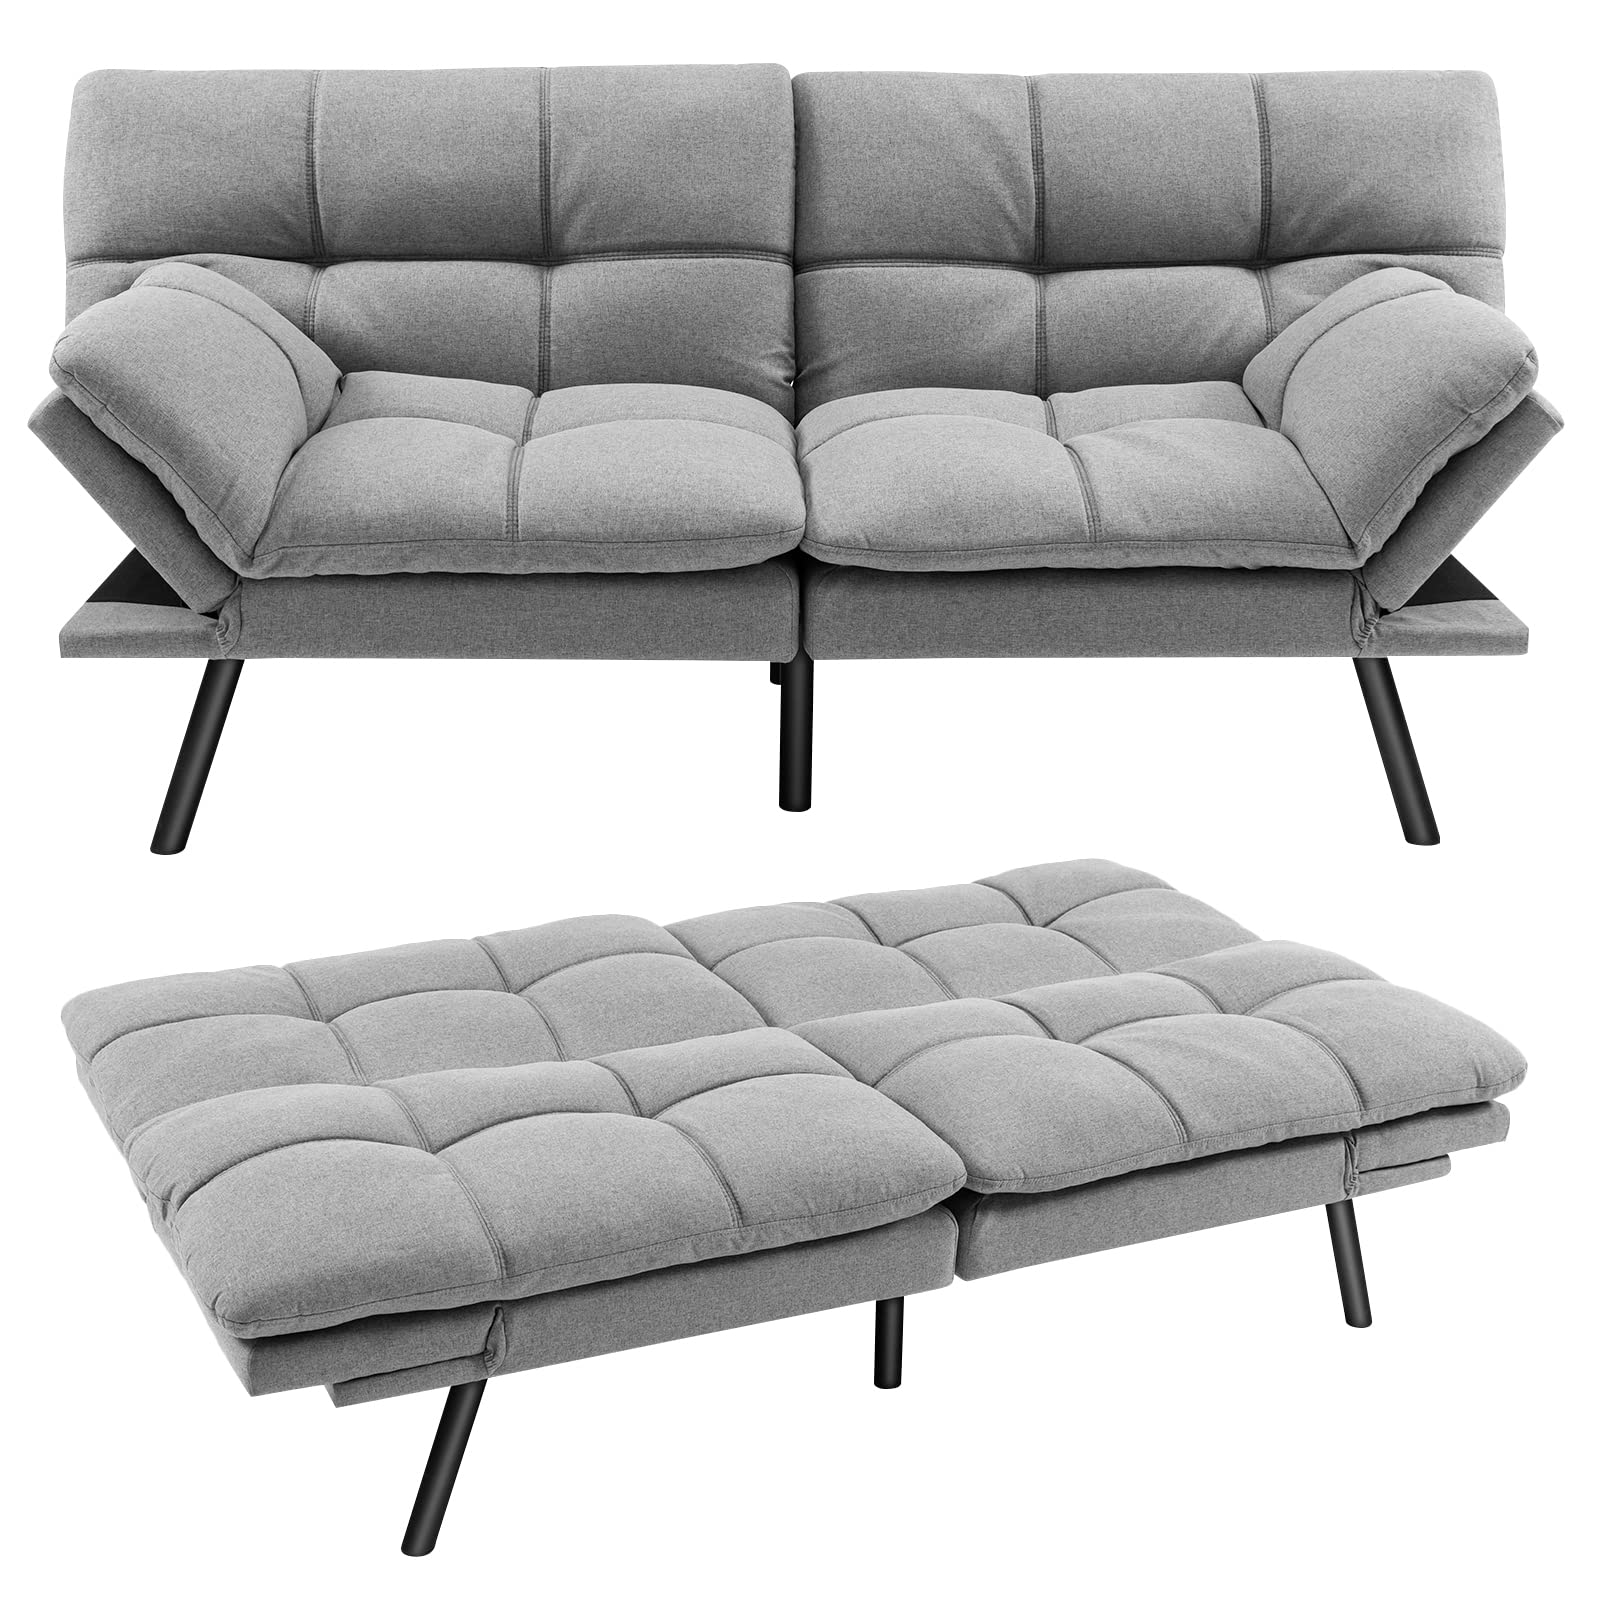 Convertible Memory Foam Futon Couch Sleeper, Grey - Giantex